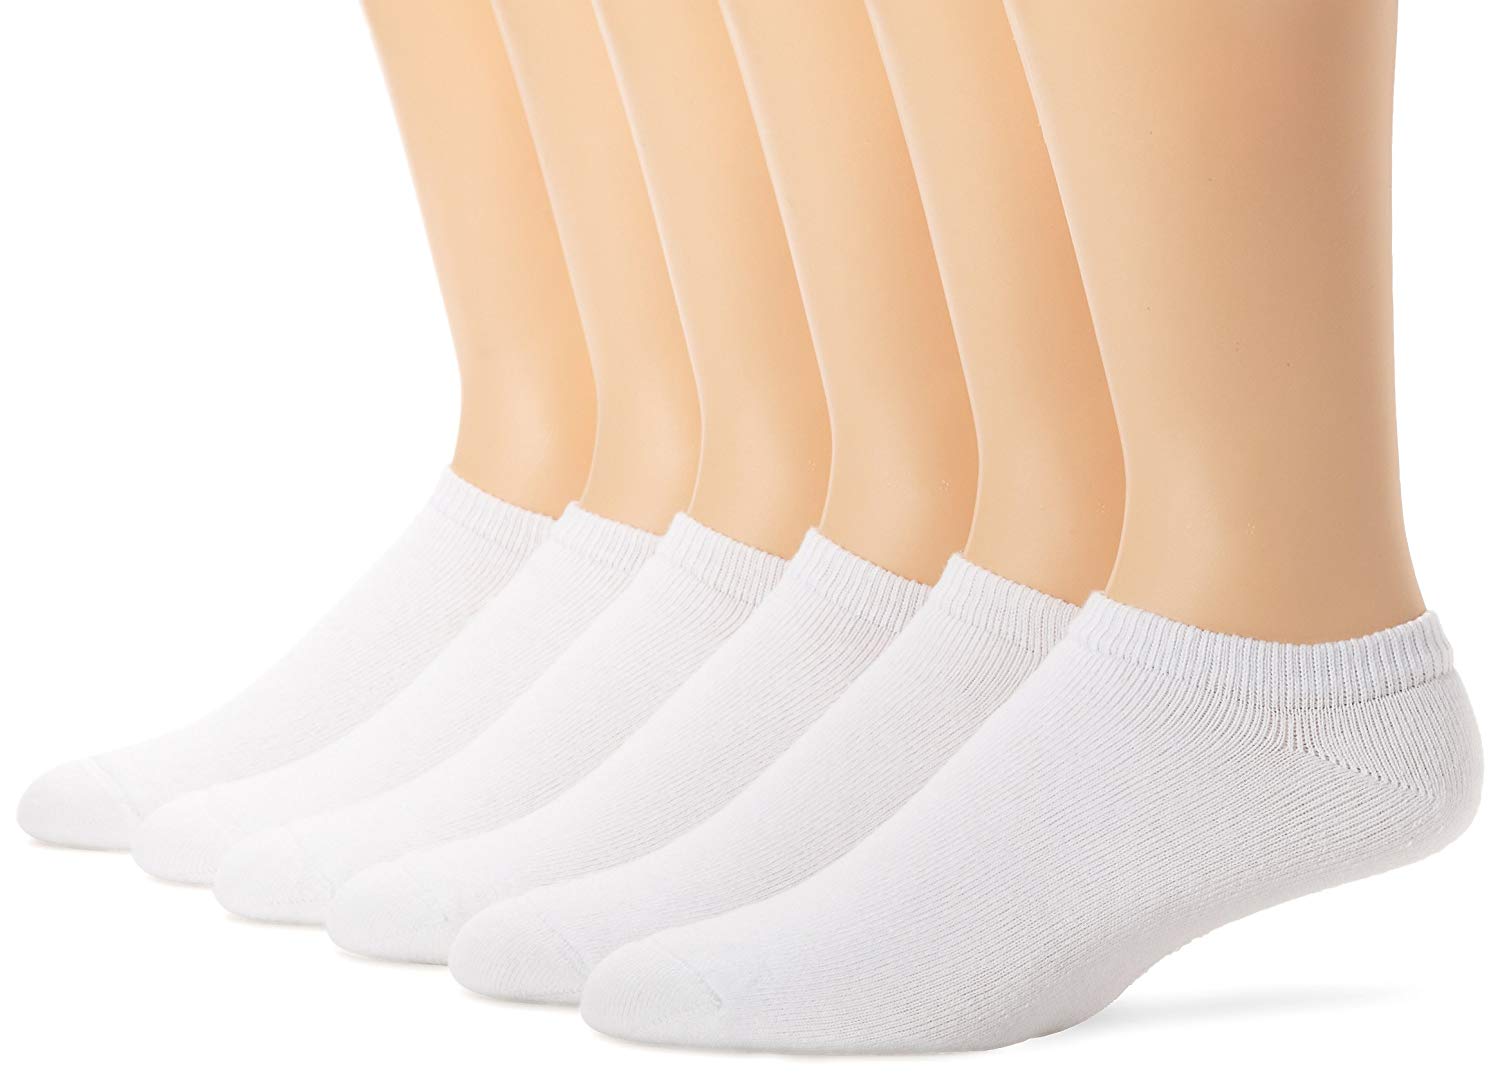 Hanes Men's 6-Pack No-Show, White, Sock Size:10-13/Shoe, White, Size 10 ...